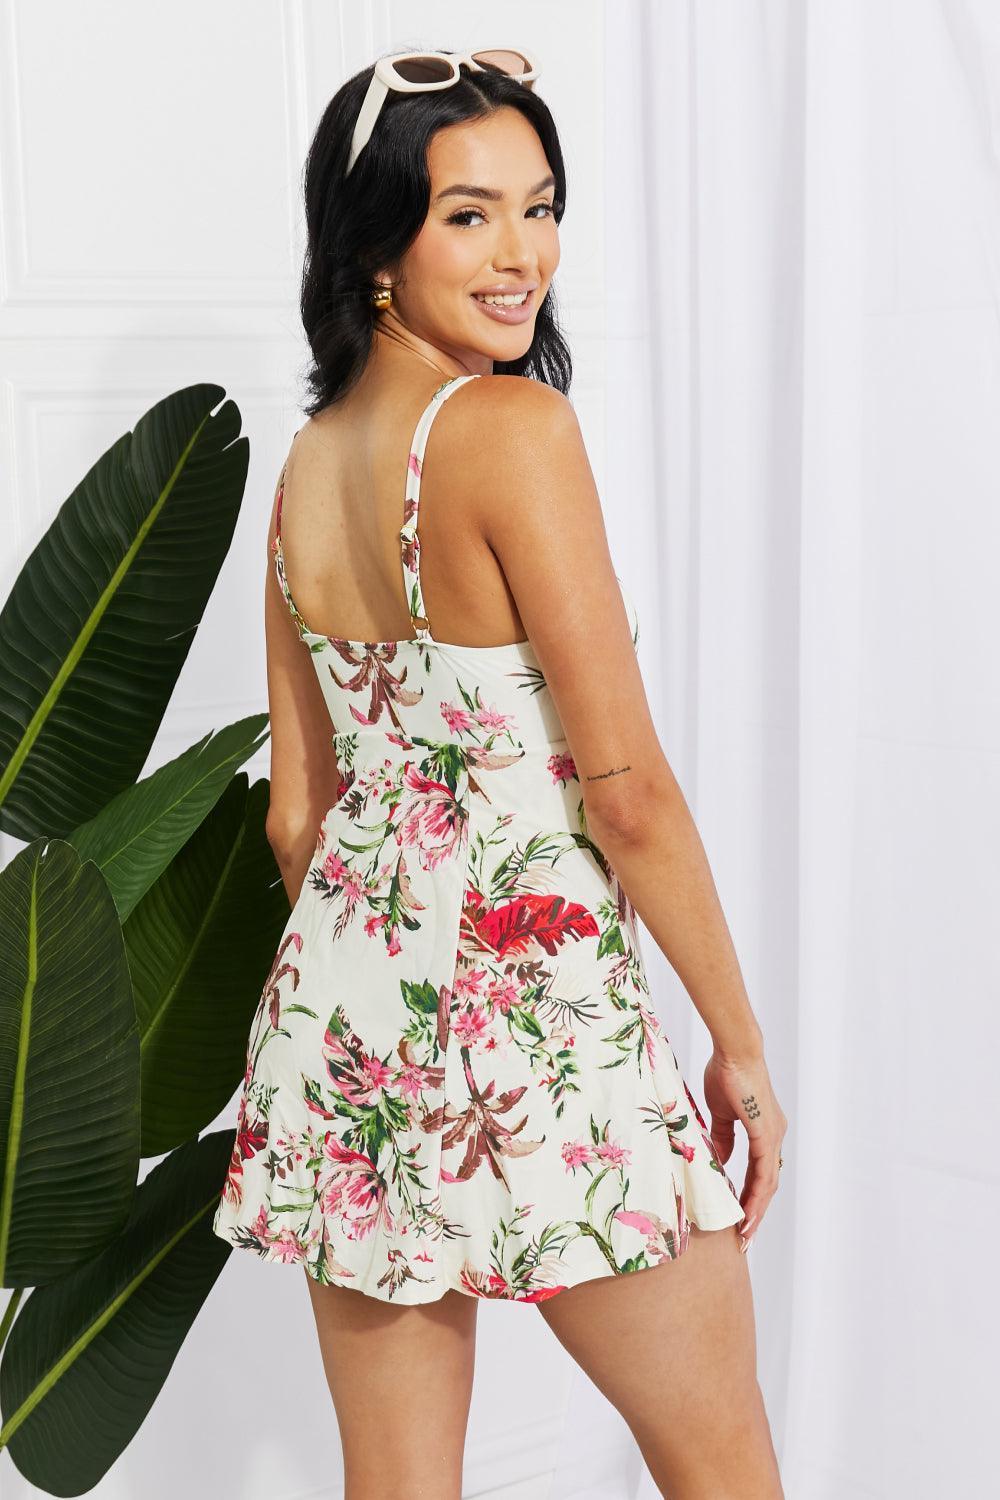 Adjustable Strap Floral Plus Size Swim Dress With Shorts - MXSTUDIO.COM